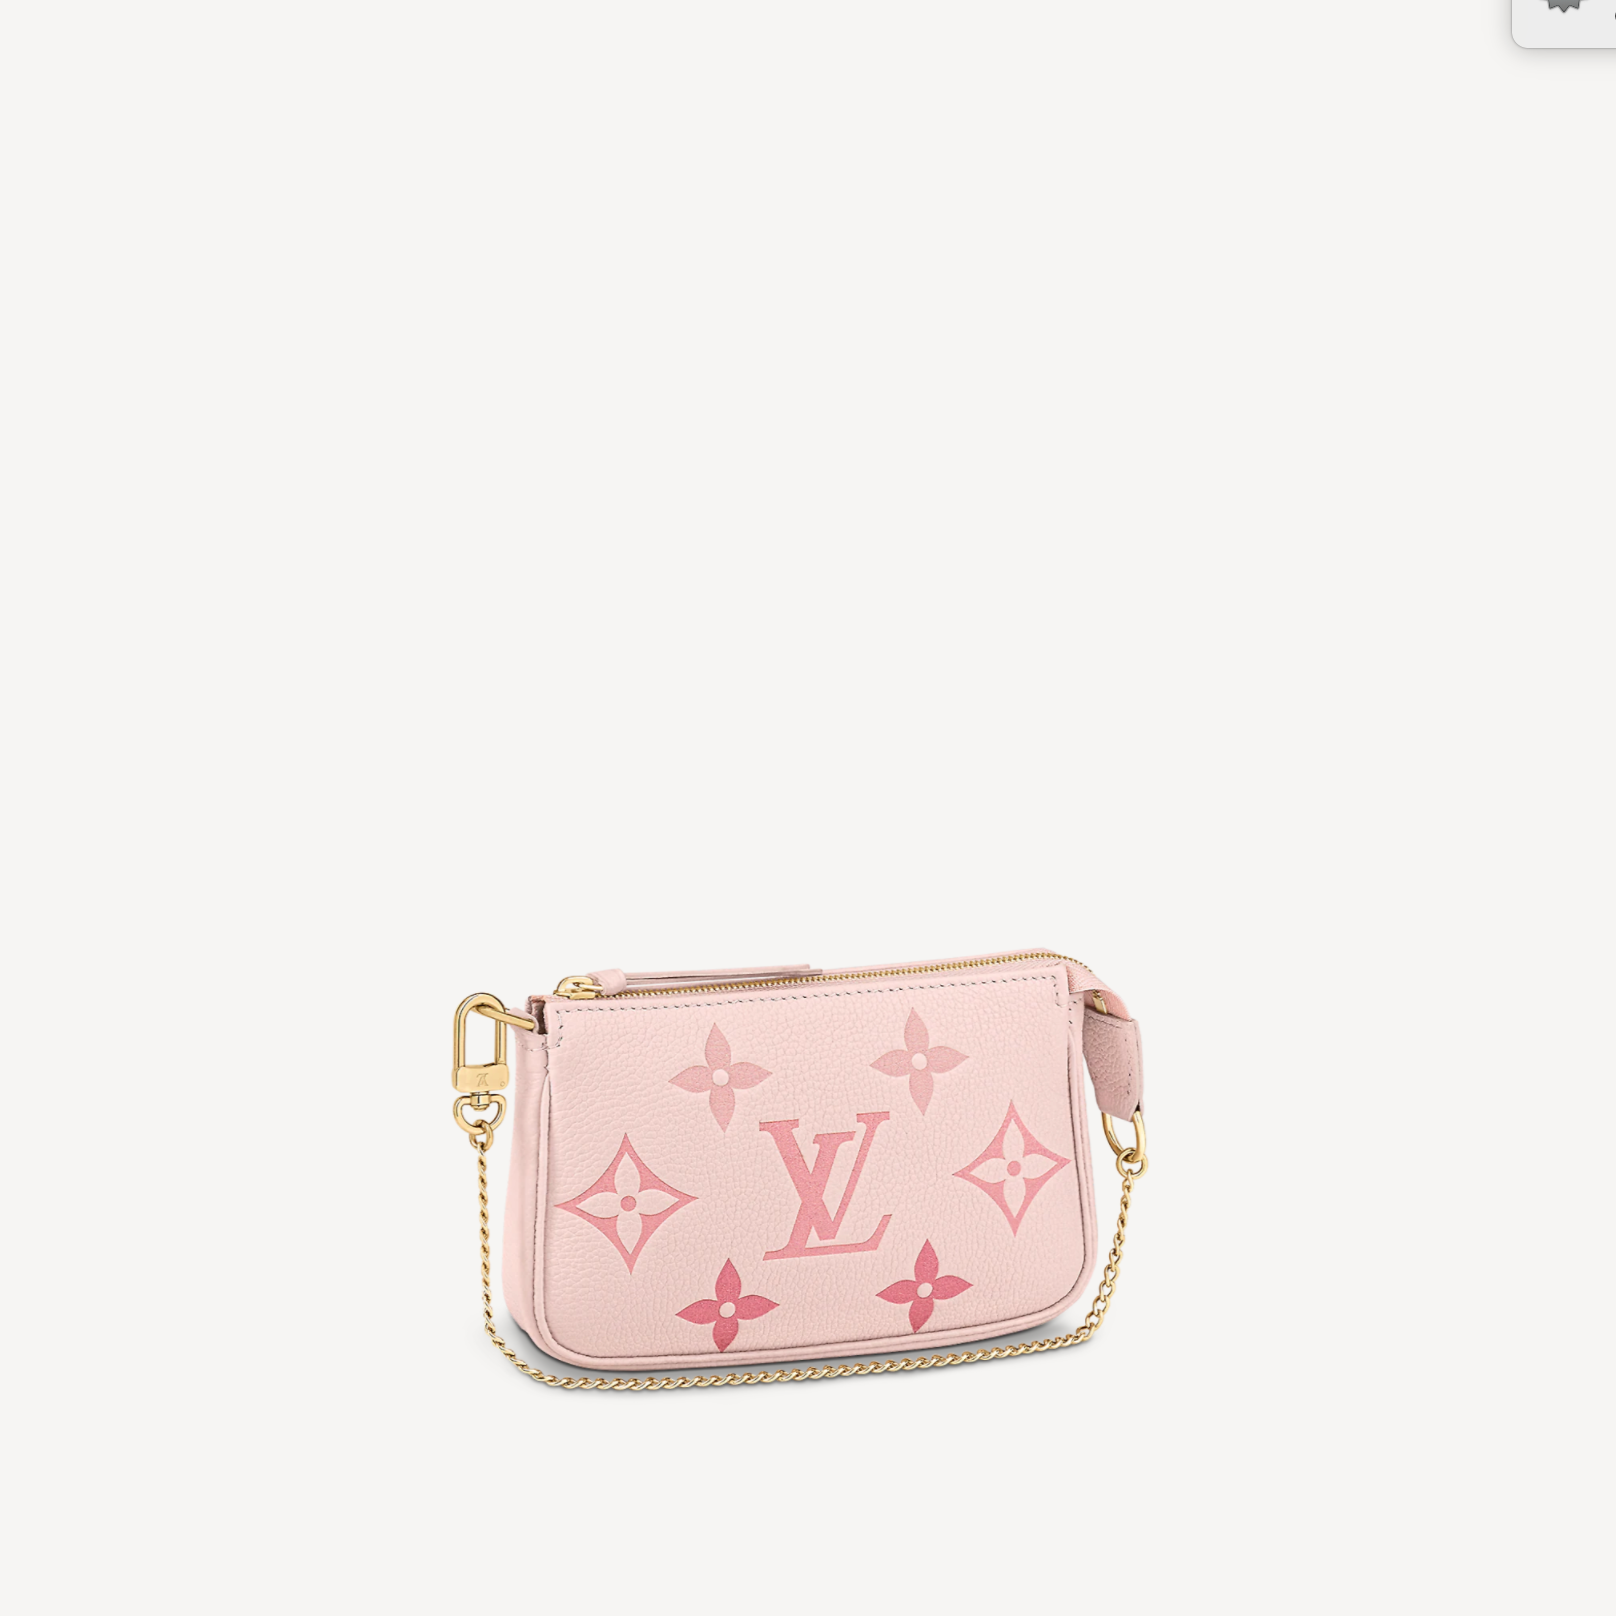 louis vuitton small pink purse